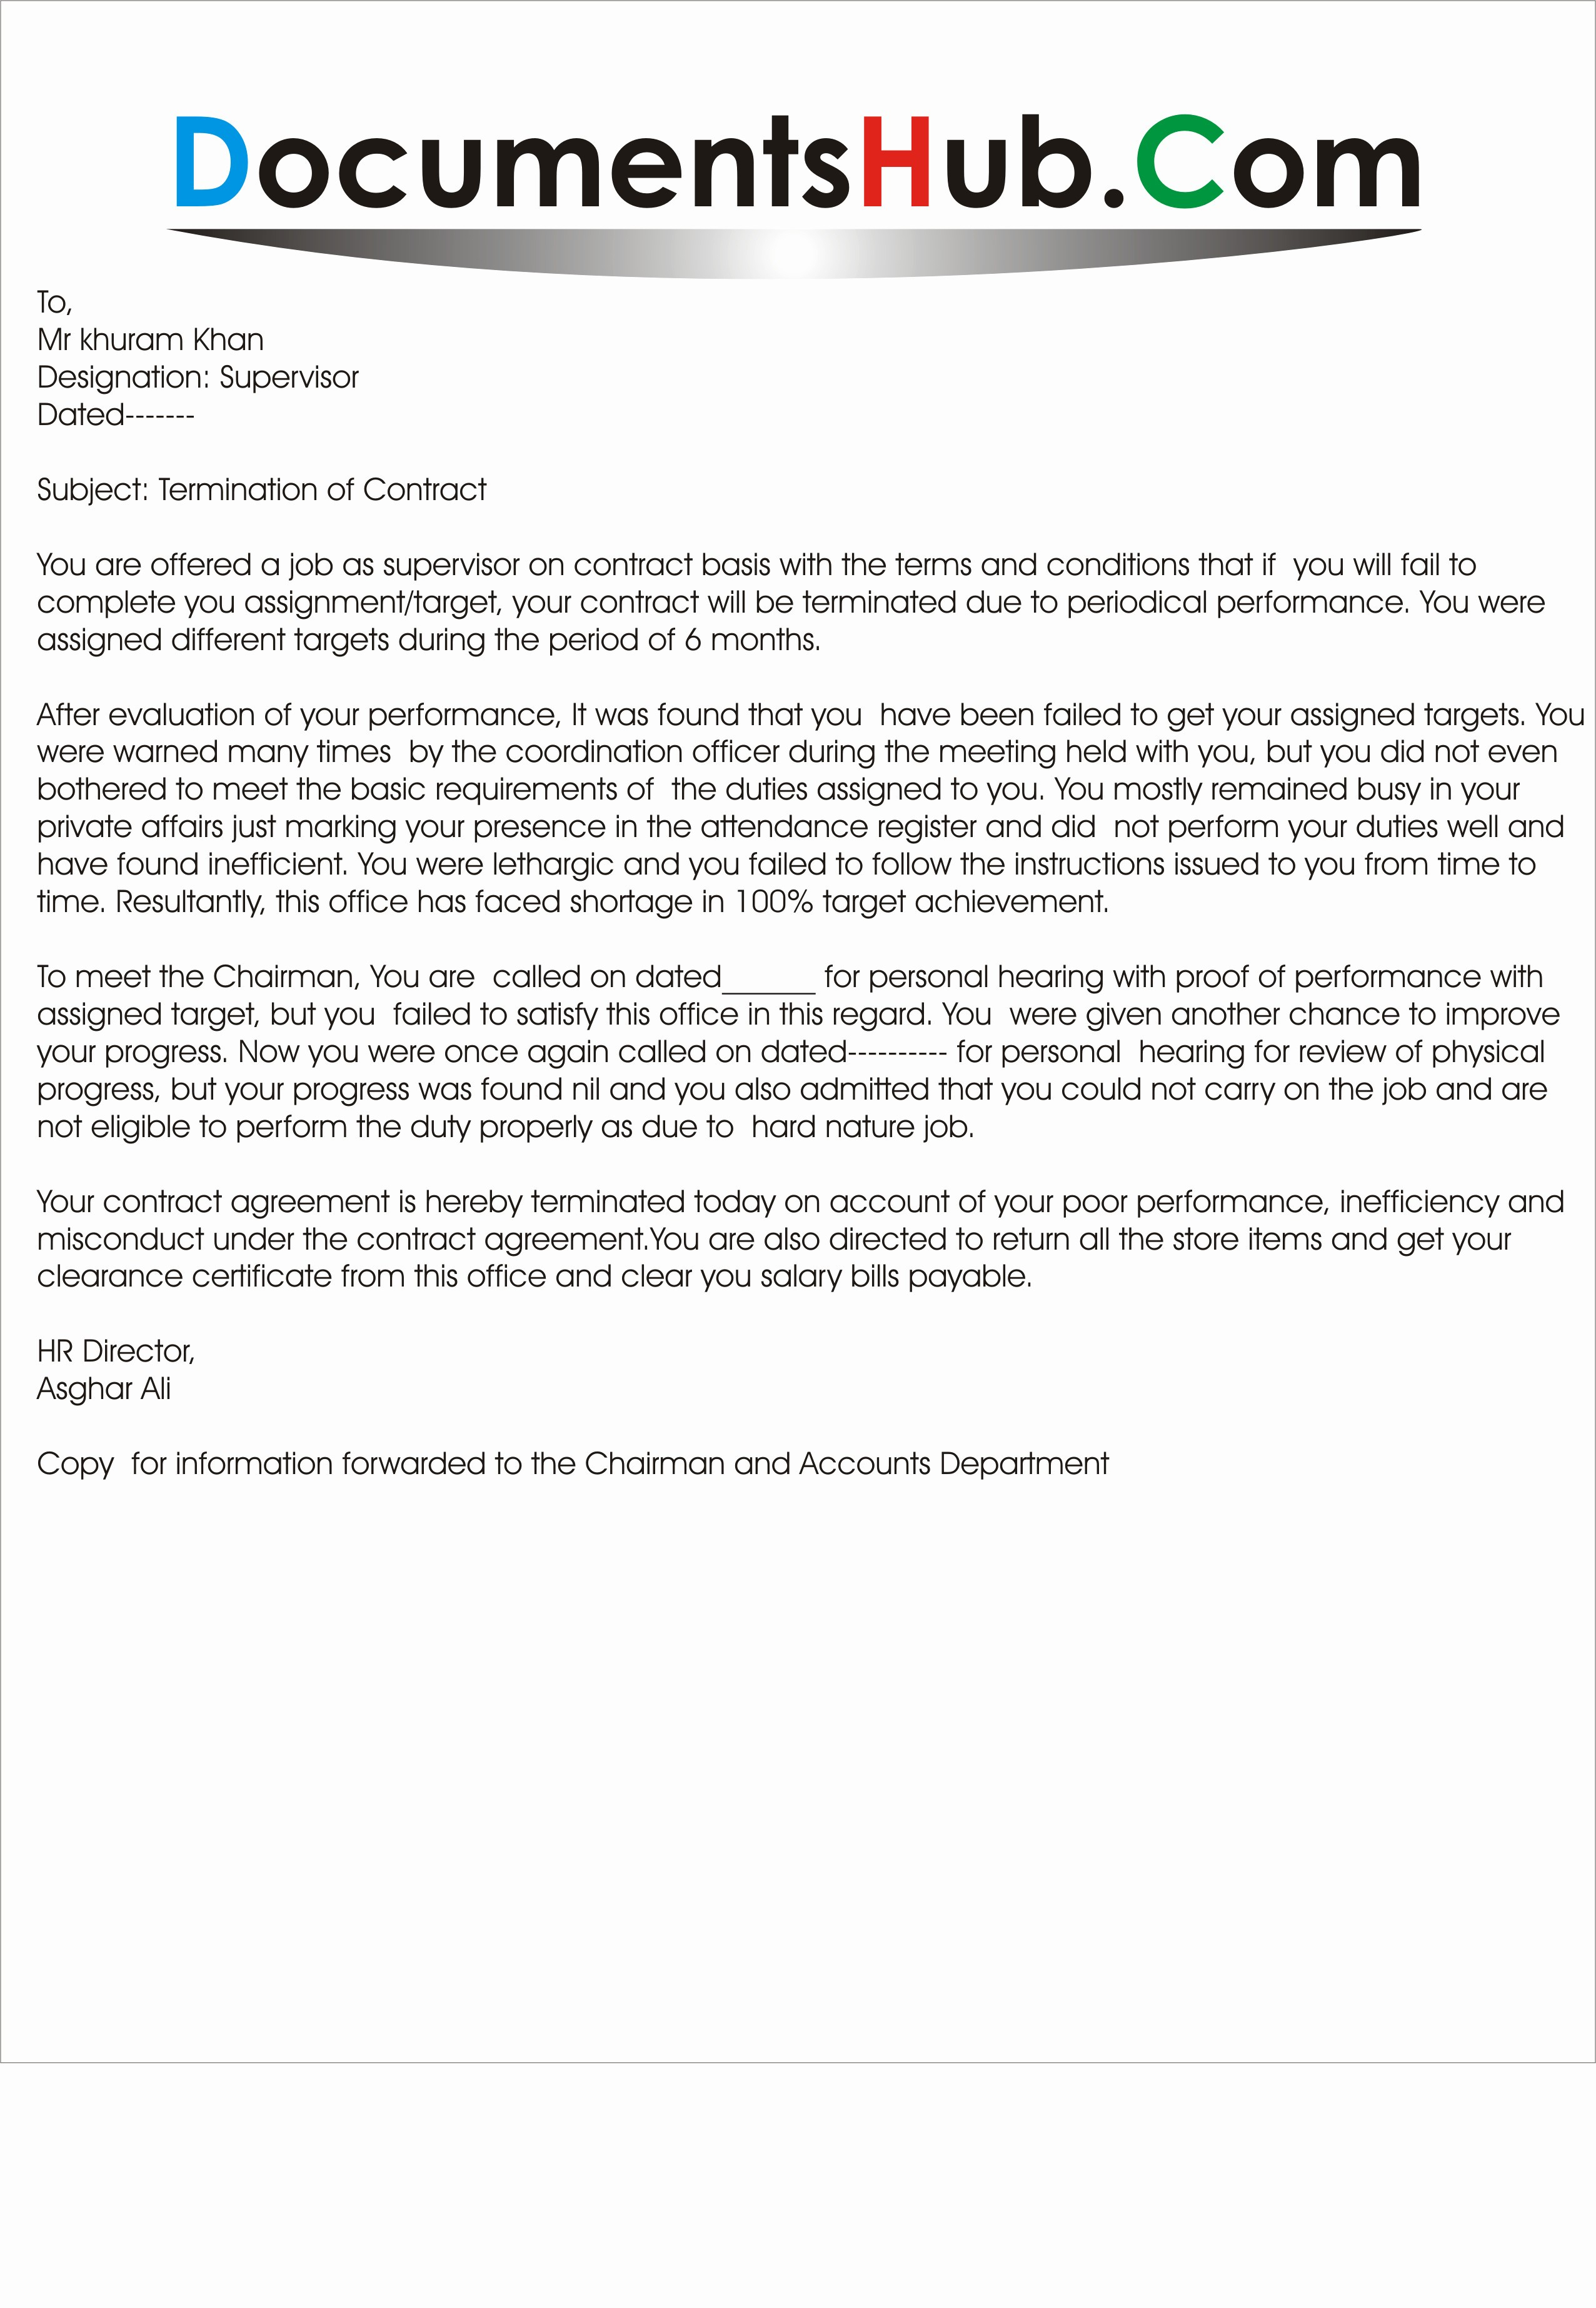 Dismissal Letter Template - Job Termination Letter Inspirationa 33 Lovely Cancellation Letter